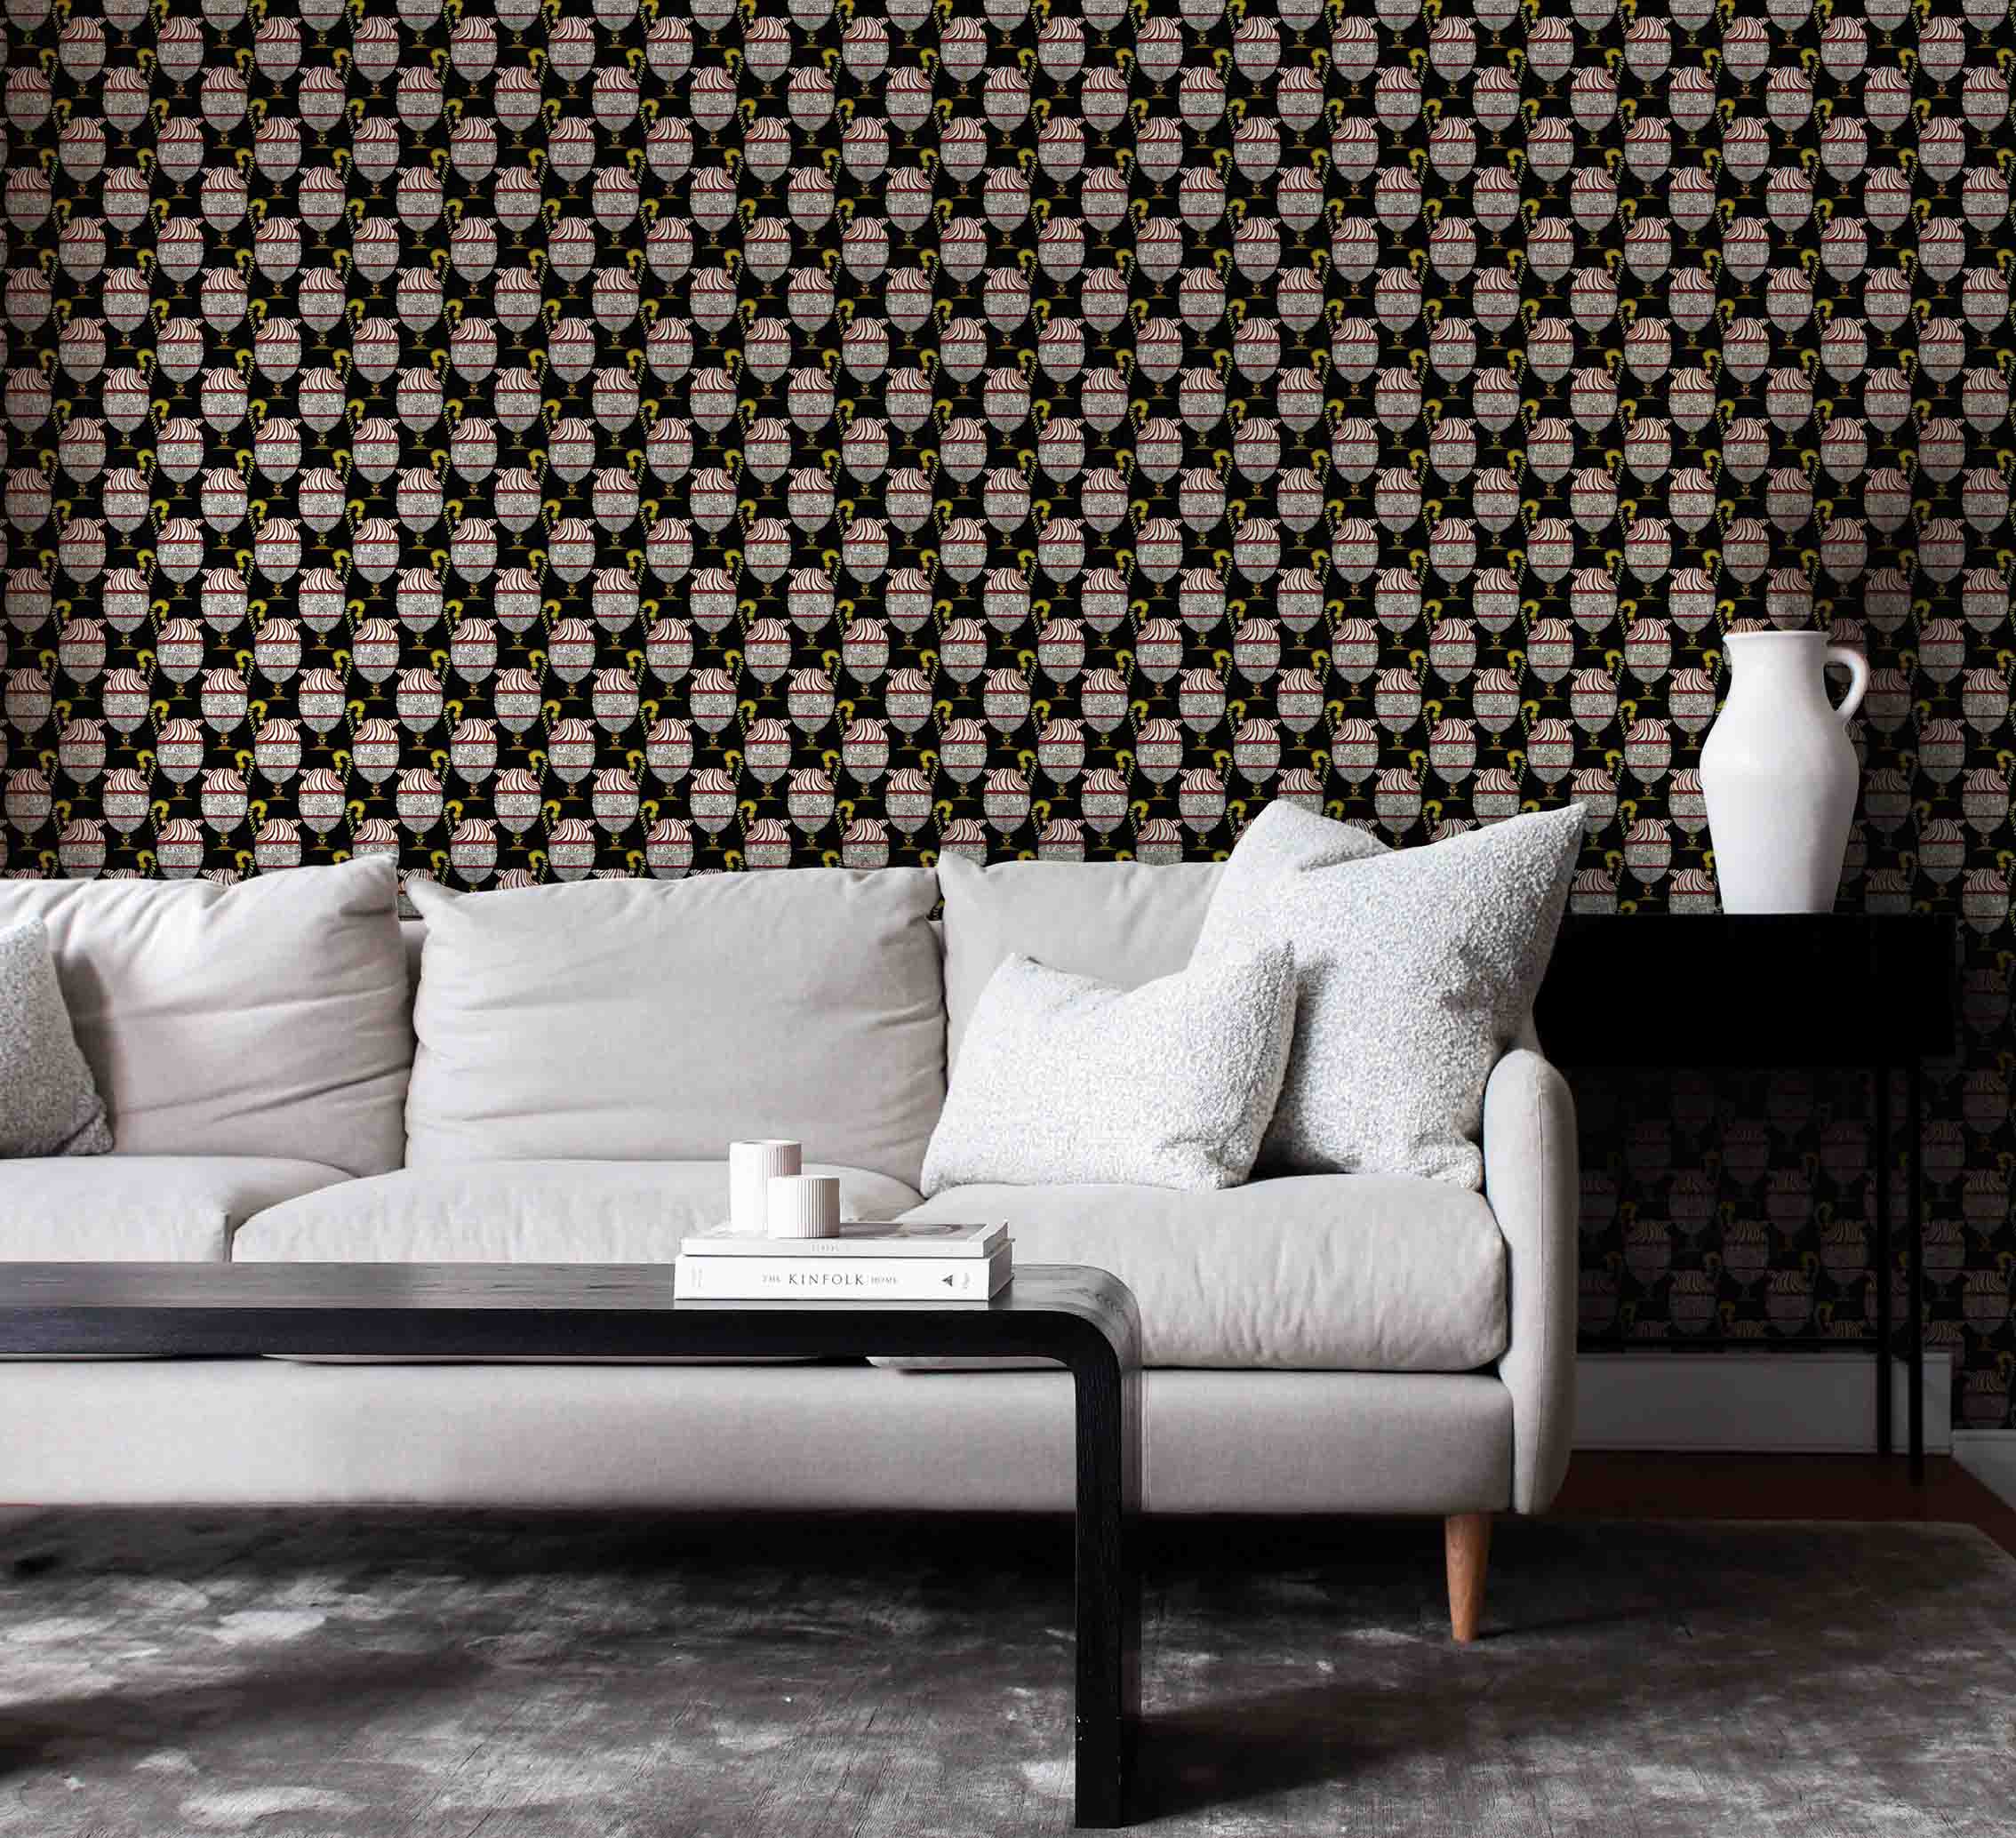 Fontana-nero-mezzanotte-Wallpaper-MaVoix-interior-living-room